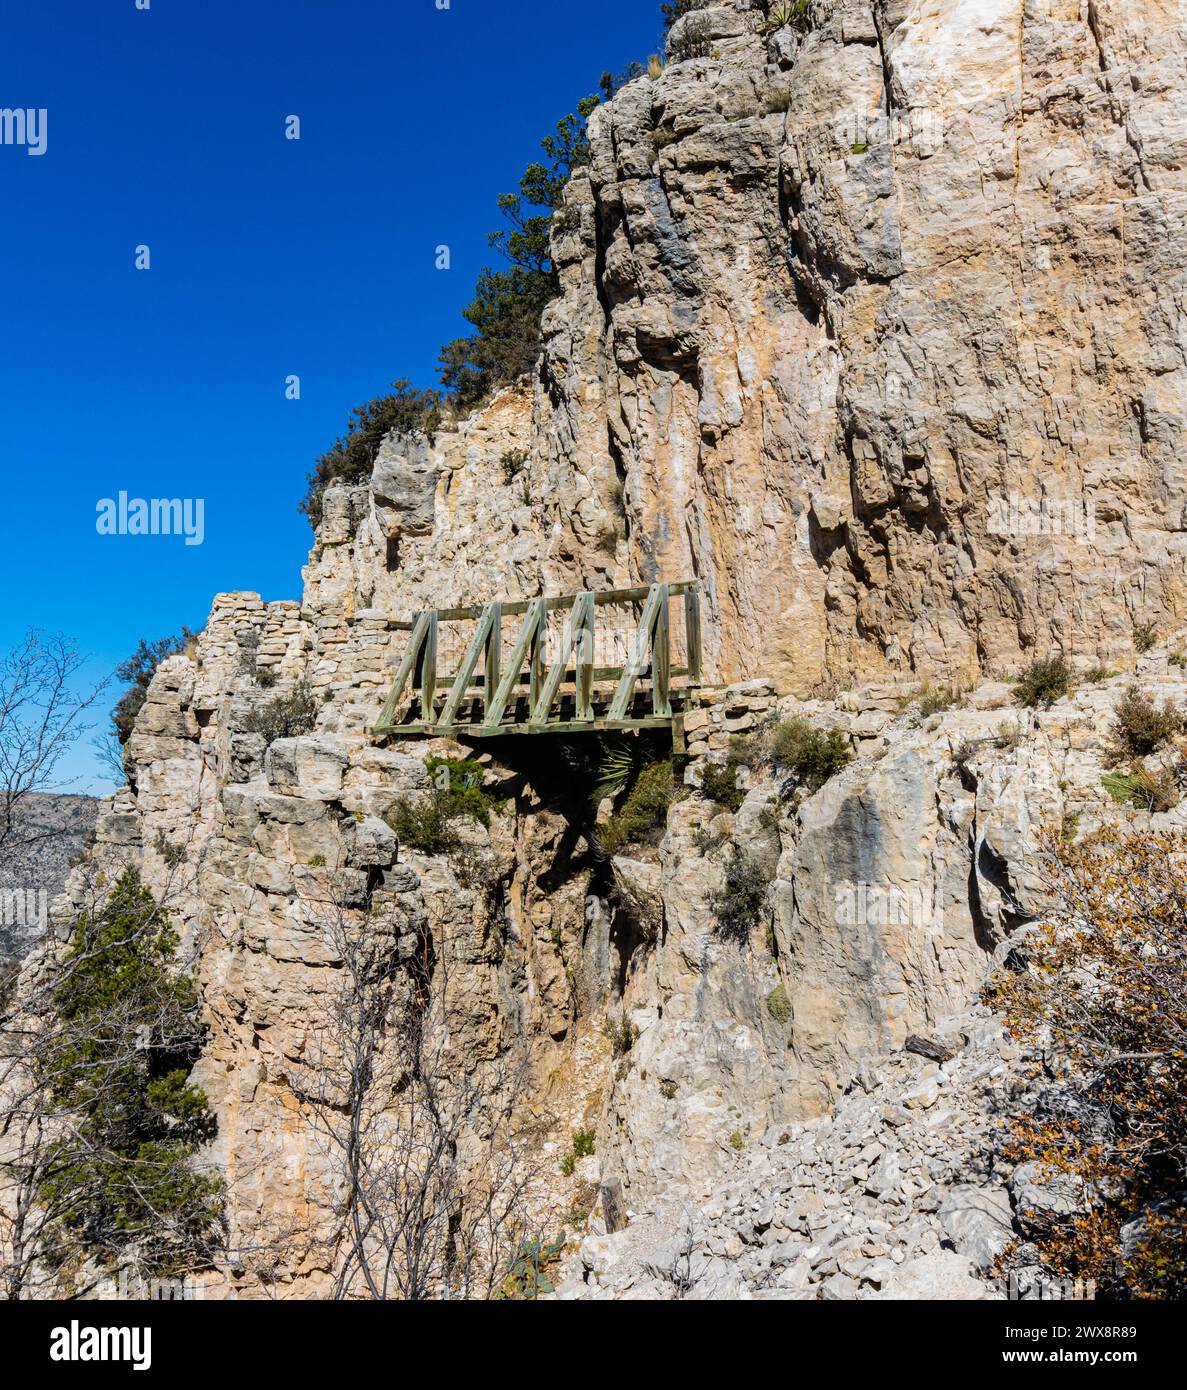 Wooden Bridge on Cliff Ledge, Guadalupe Peak Trail, Guadalupe Mountains National Park, Texas, USA Stock Photo